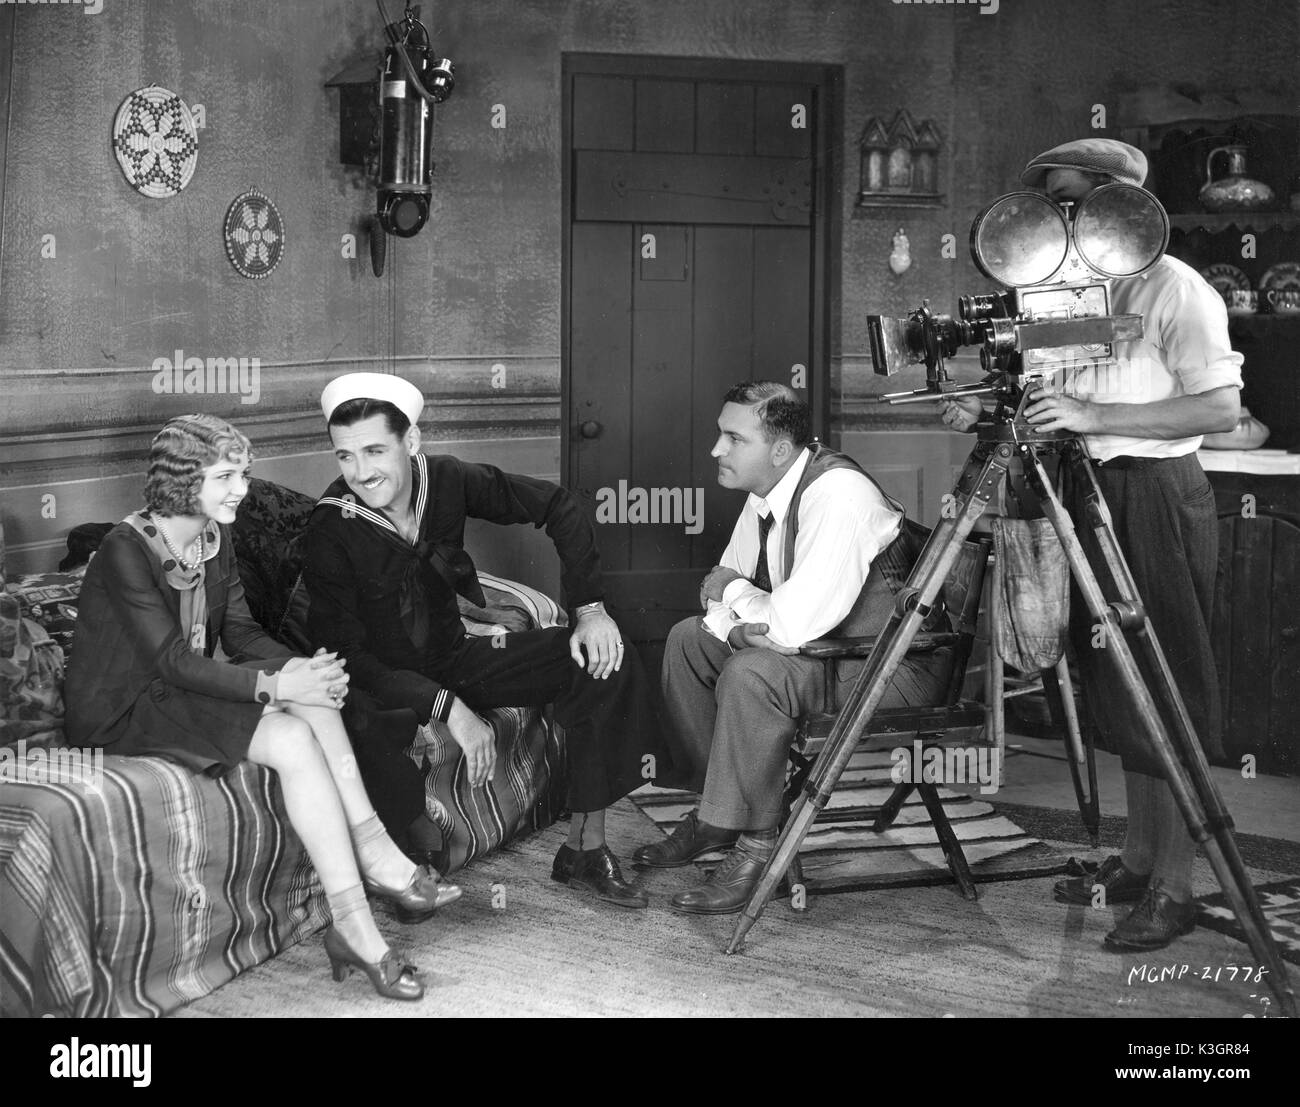 UNDENTIFIED 1920s FILM INDUSTRY SHOT Stock Photo